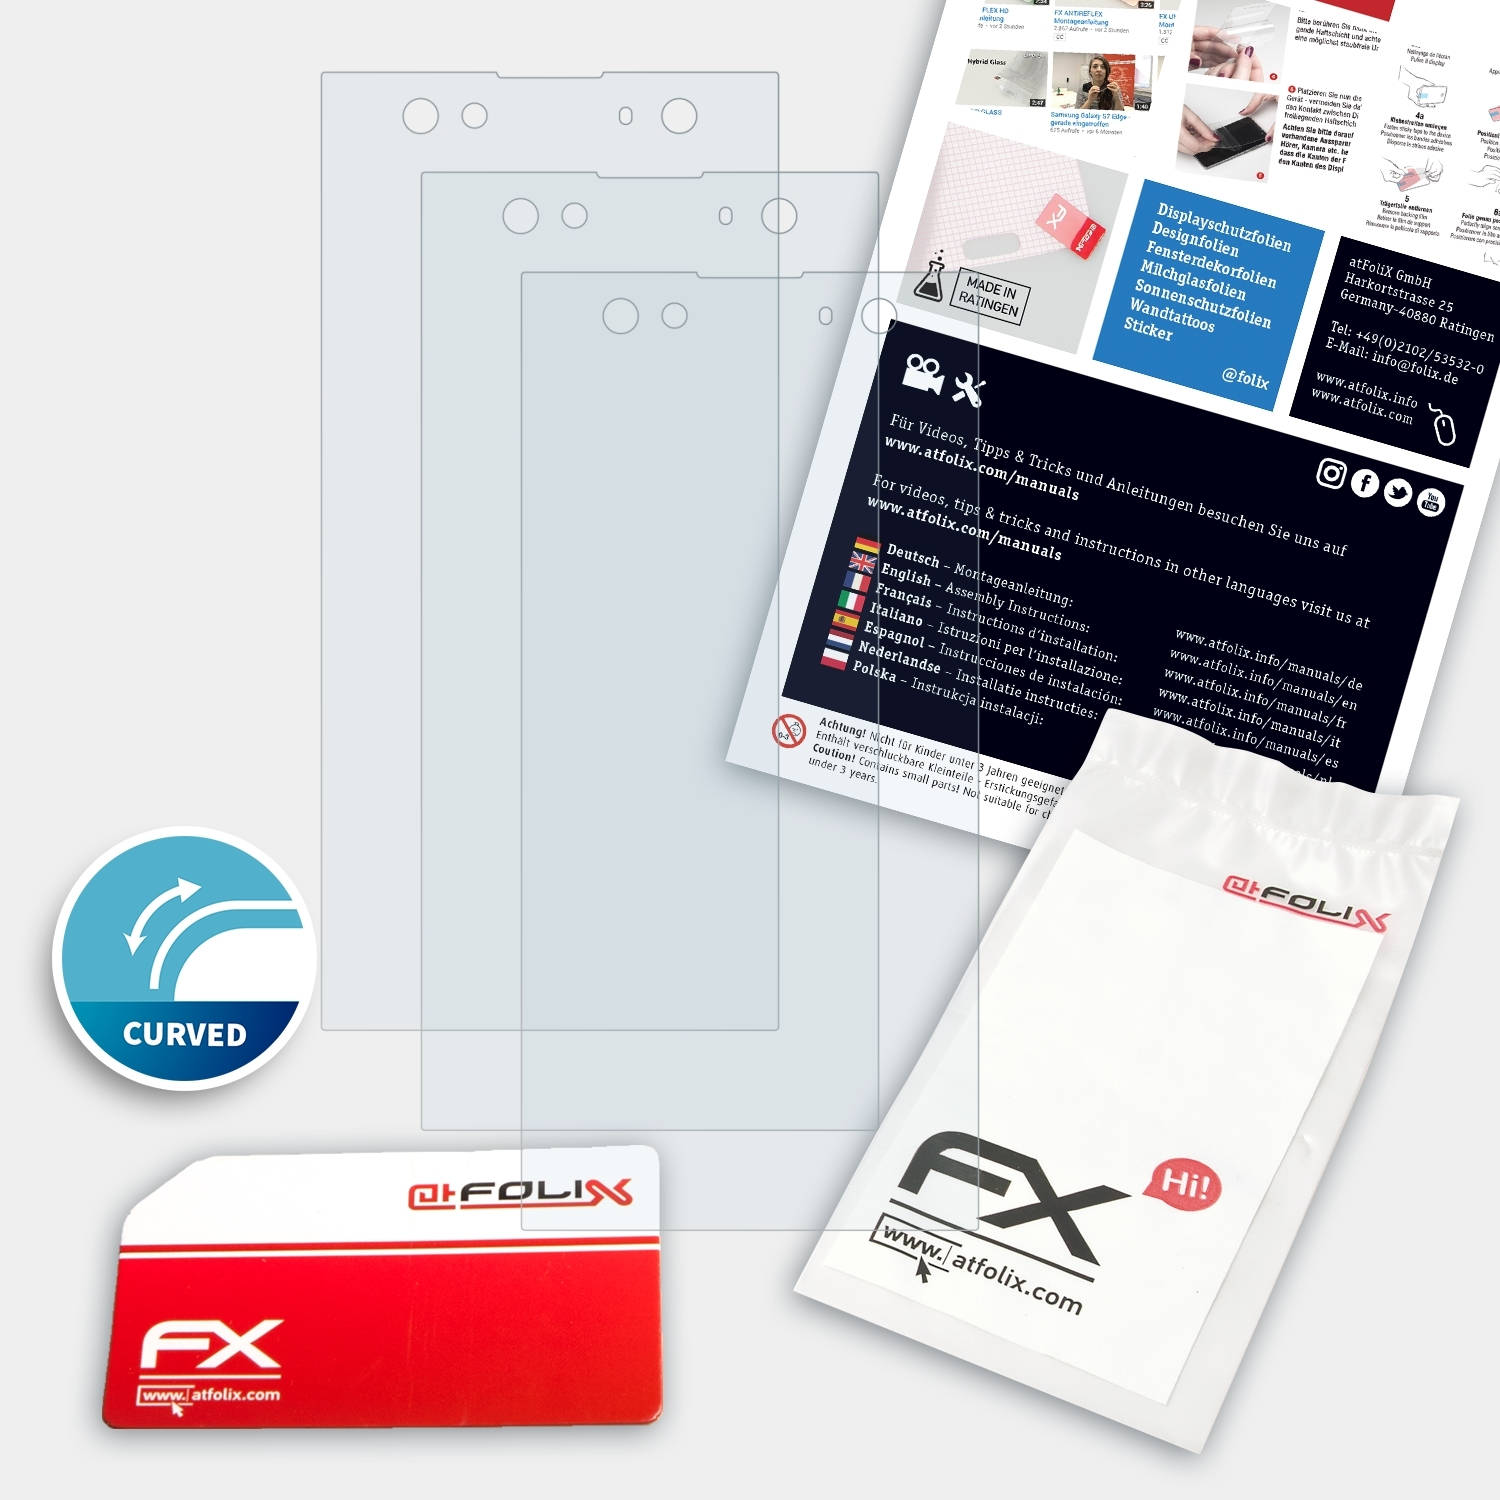 Ultra) 3x Xperia FX-ActiFleX Sony ATFOLIX XA2 Displayschutz(für